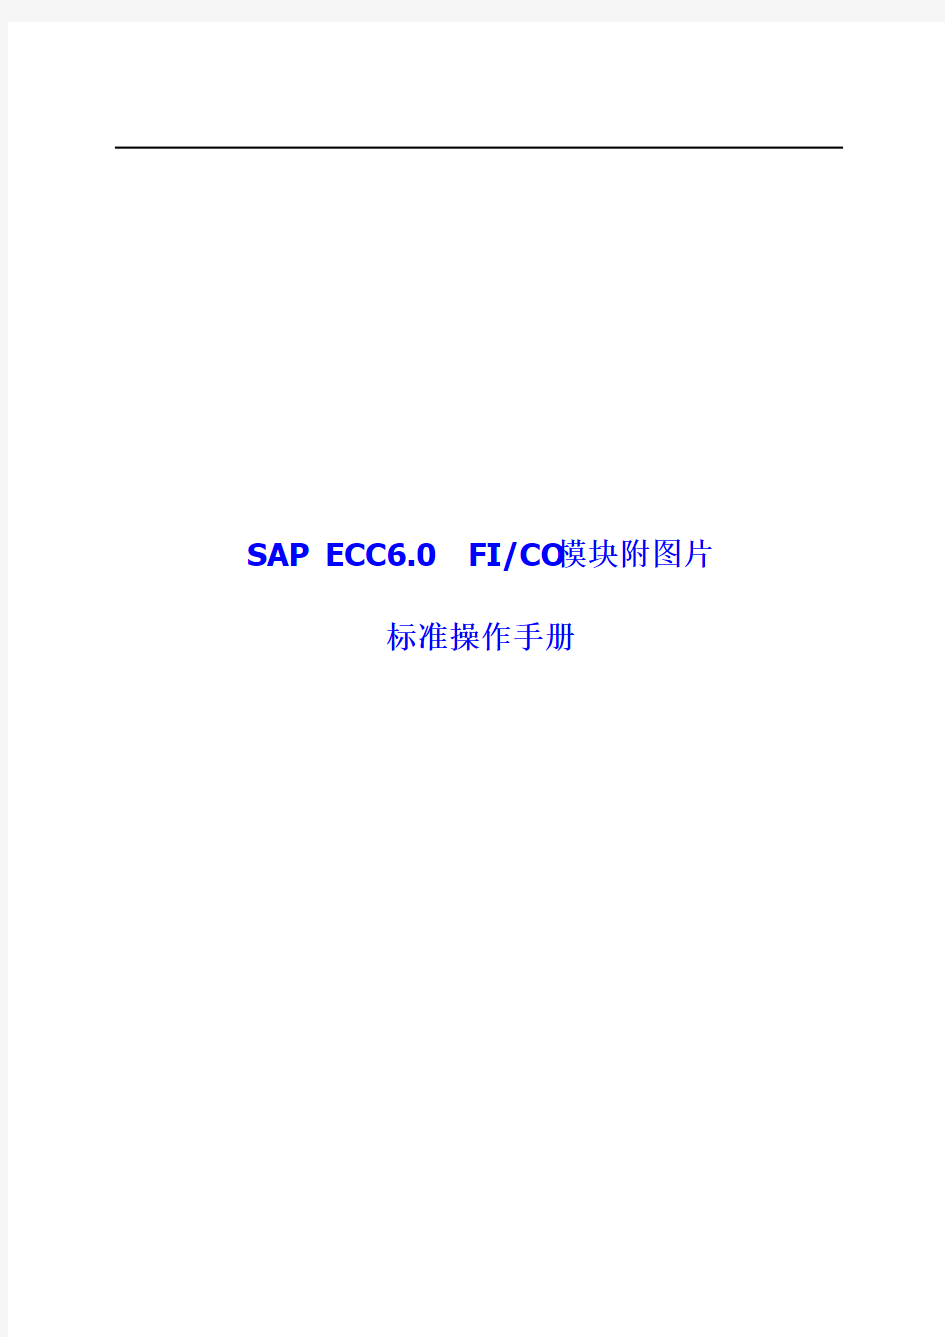 SAP ECC6.0 FICO财务模块附图片标准操作手册